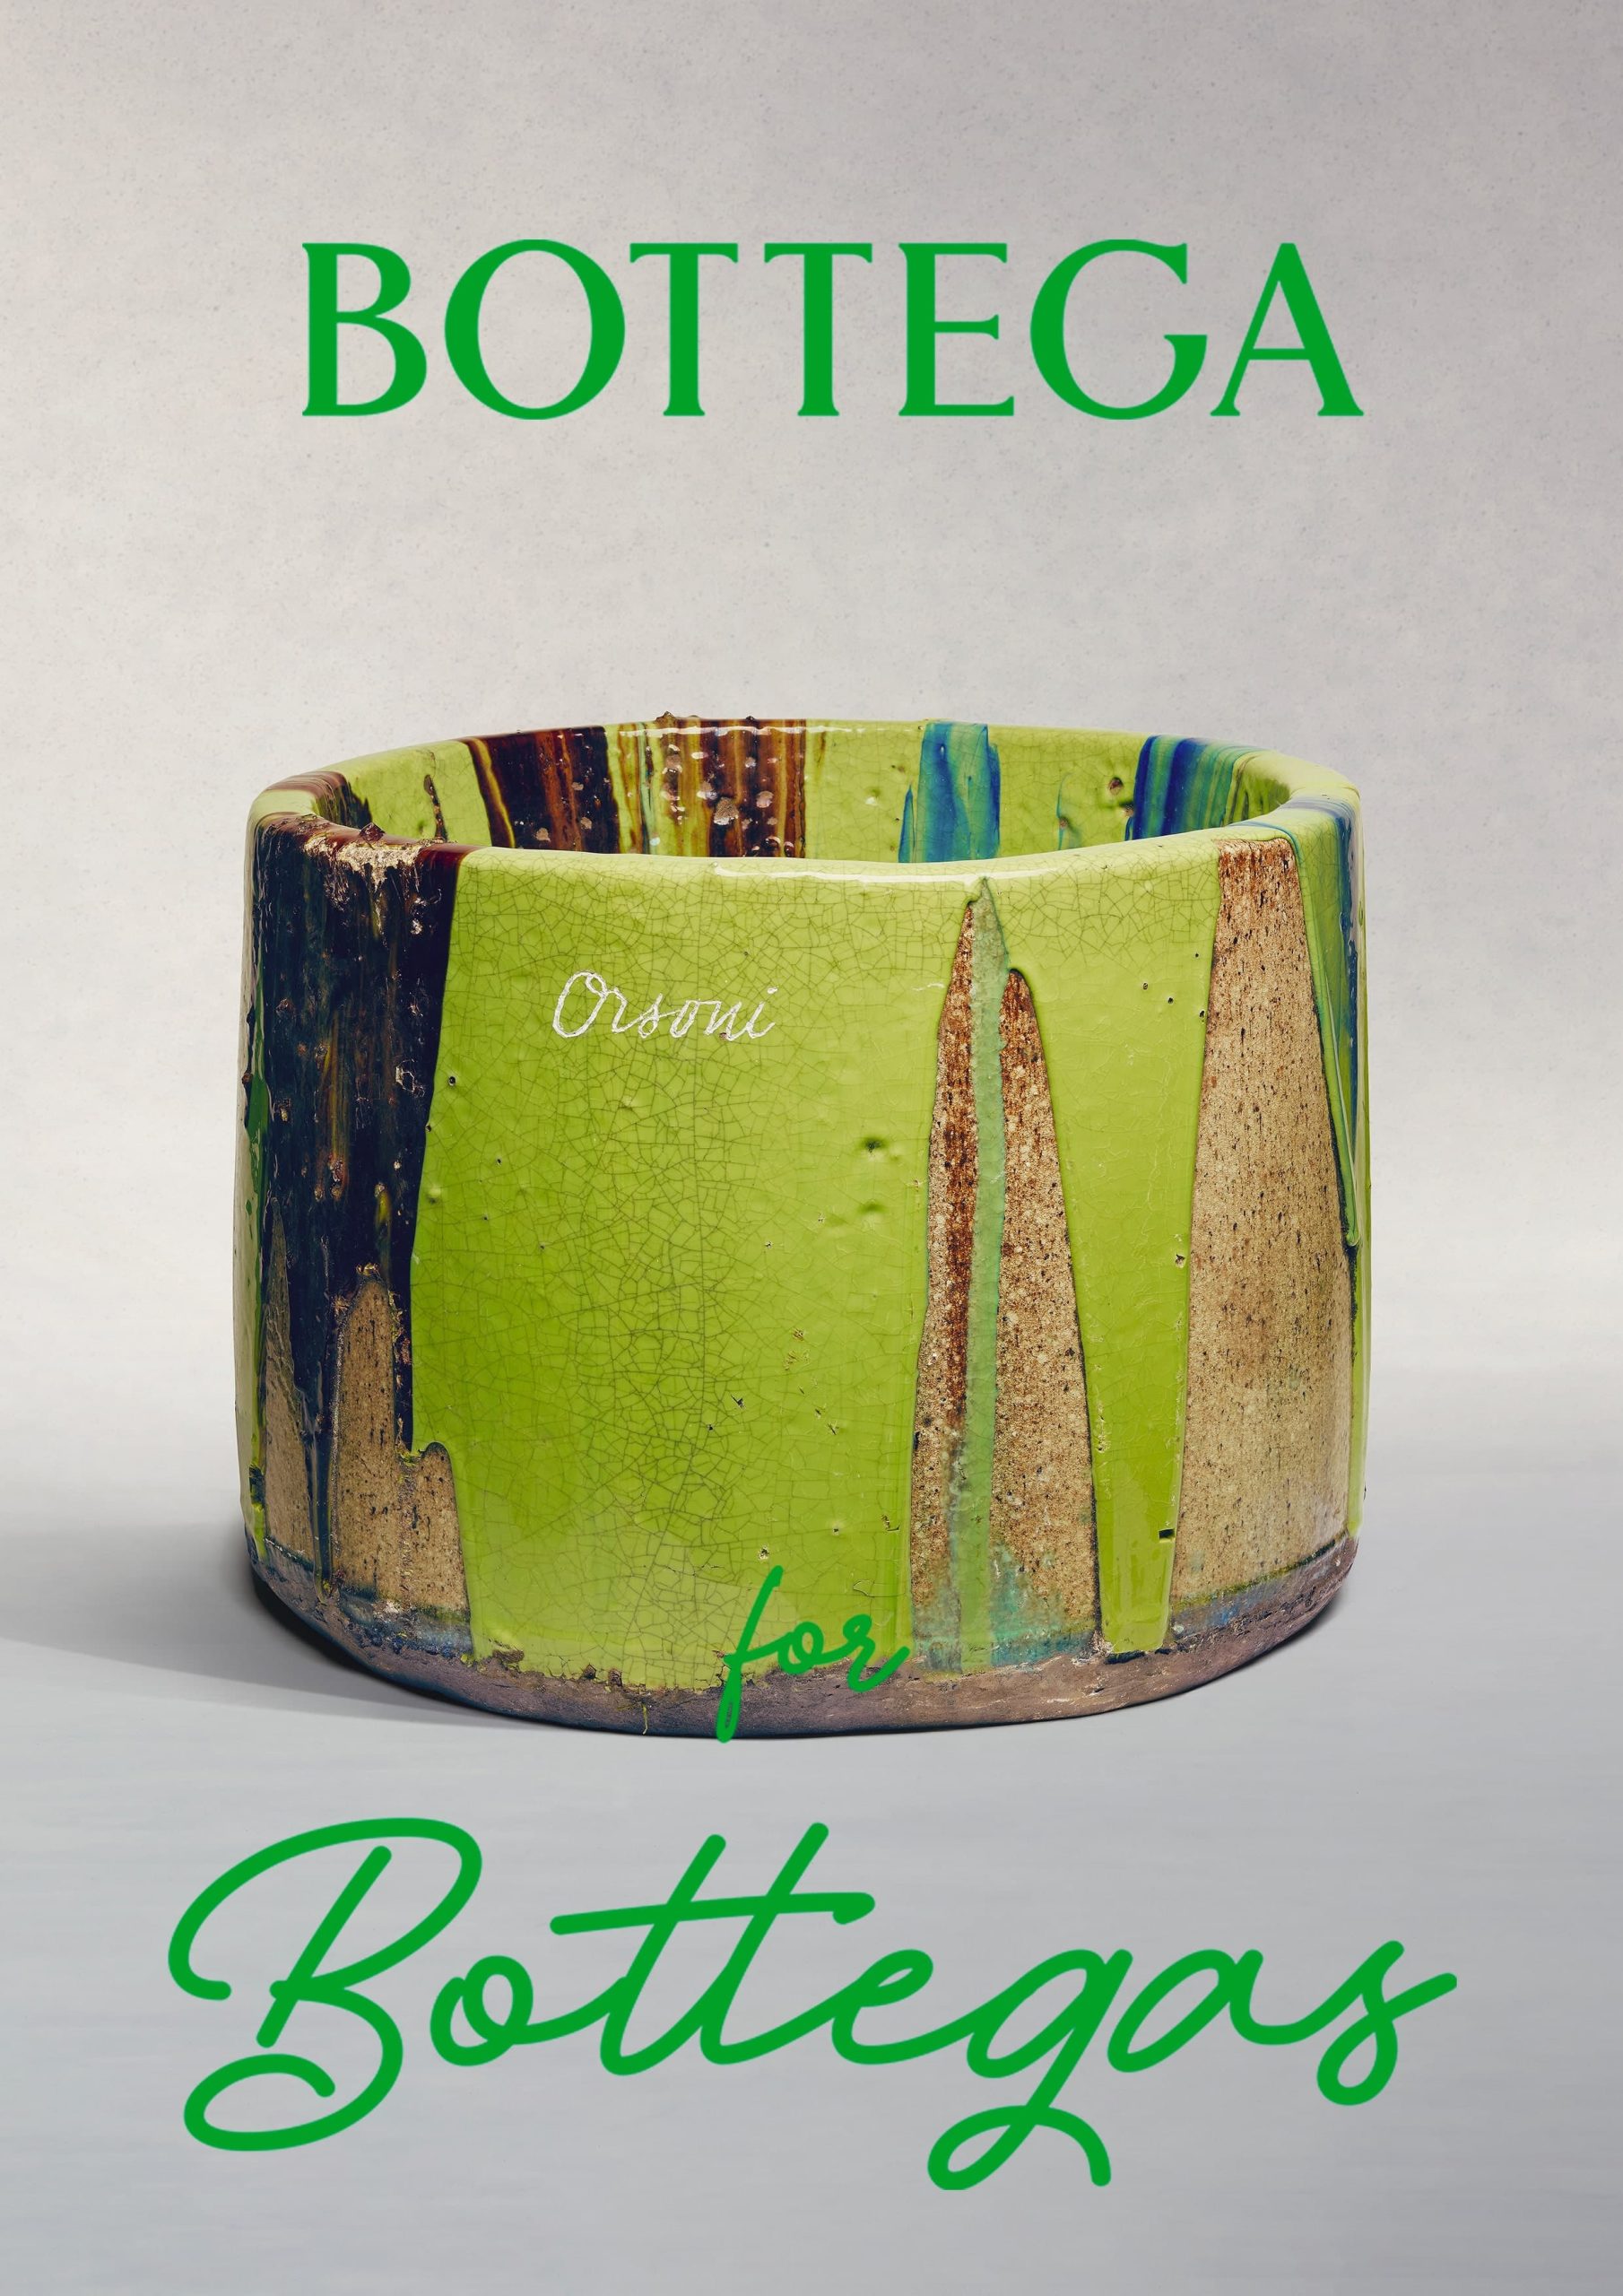 Bottega Veneta Launches “Bottega for Bottegas” Project